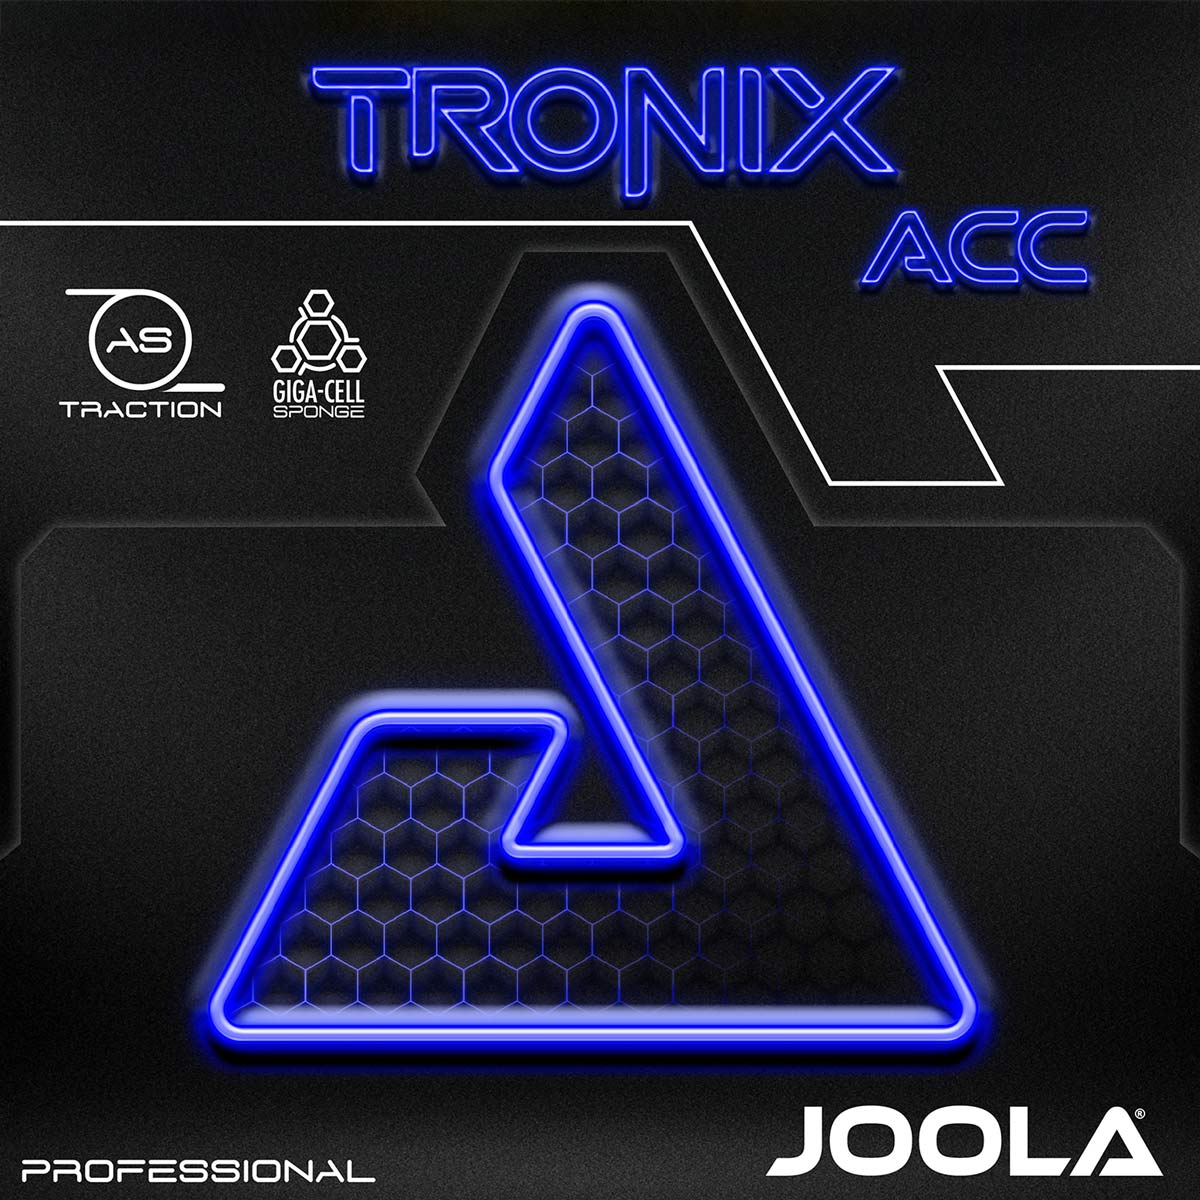 JOOLA Tronix ACC - Table Tennis Rubber